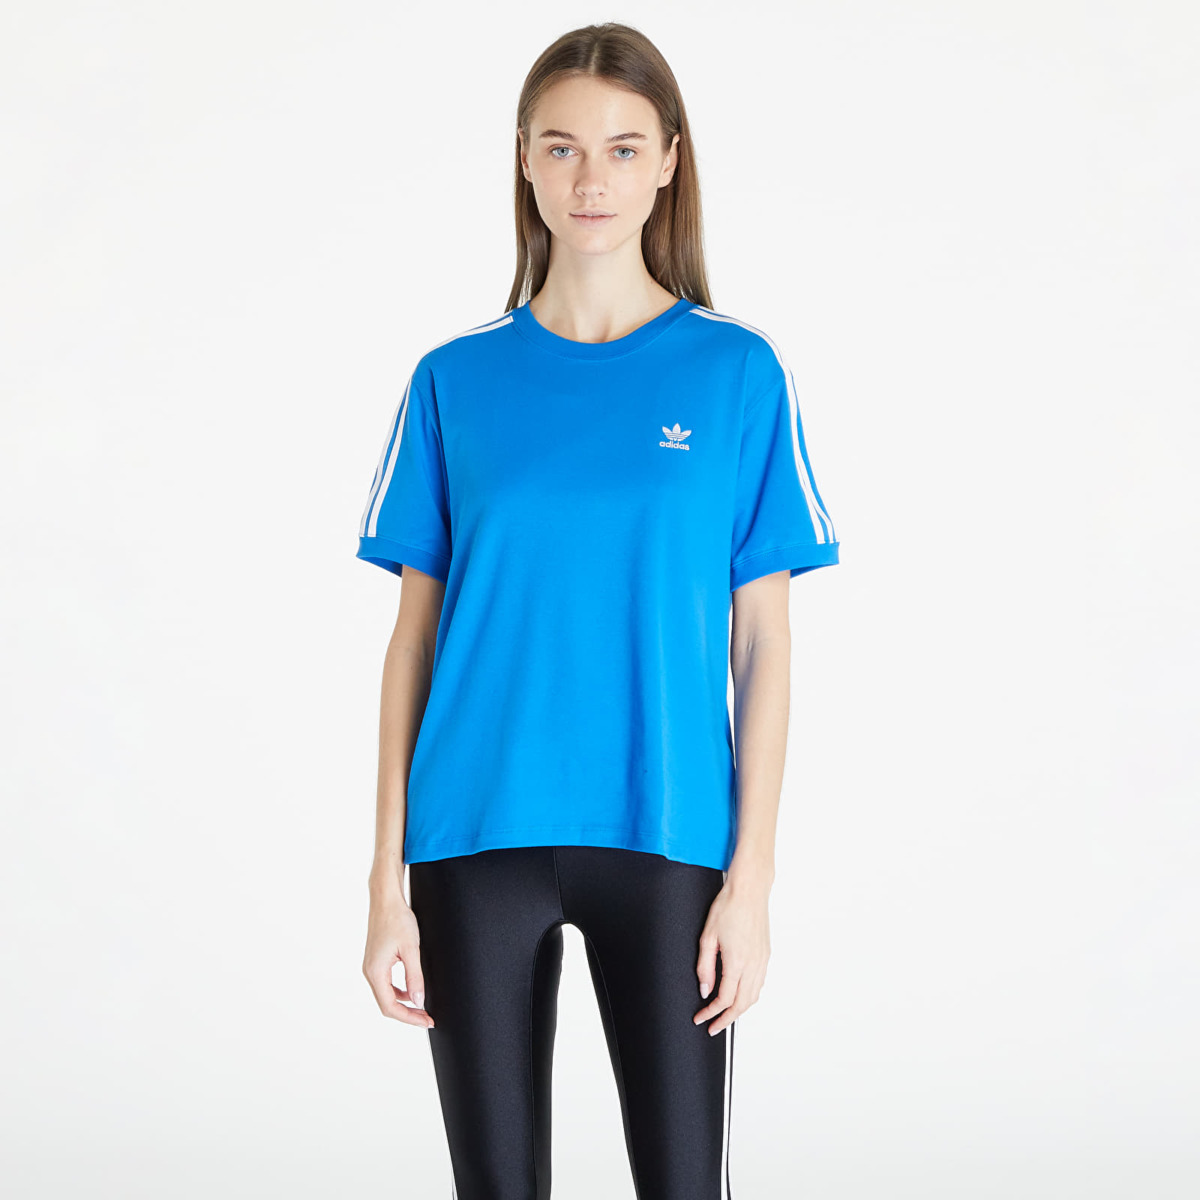 Footshop - Women's Top in Blue - Adidas GOOFASH